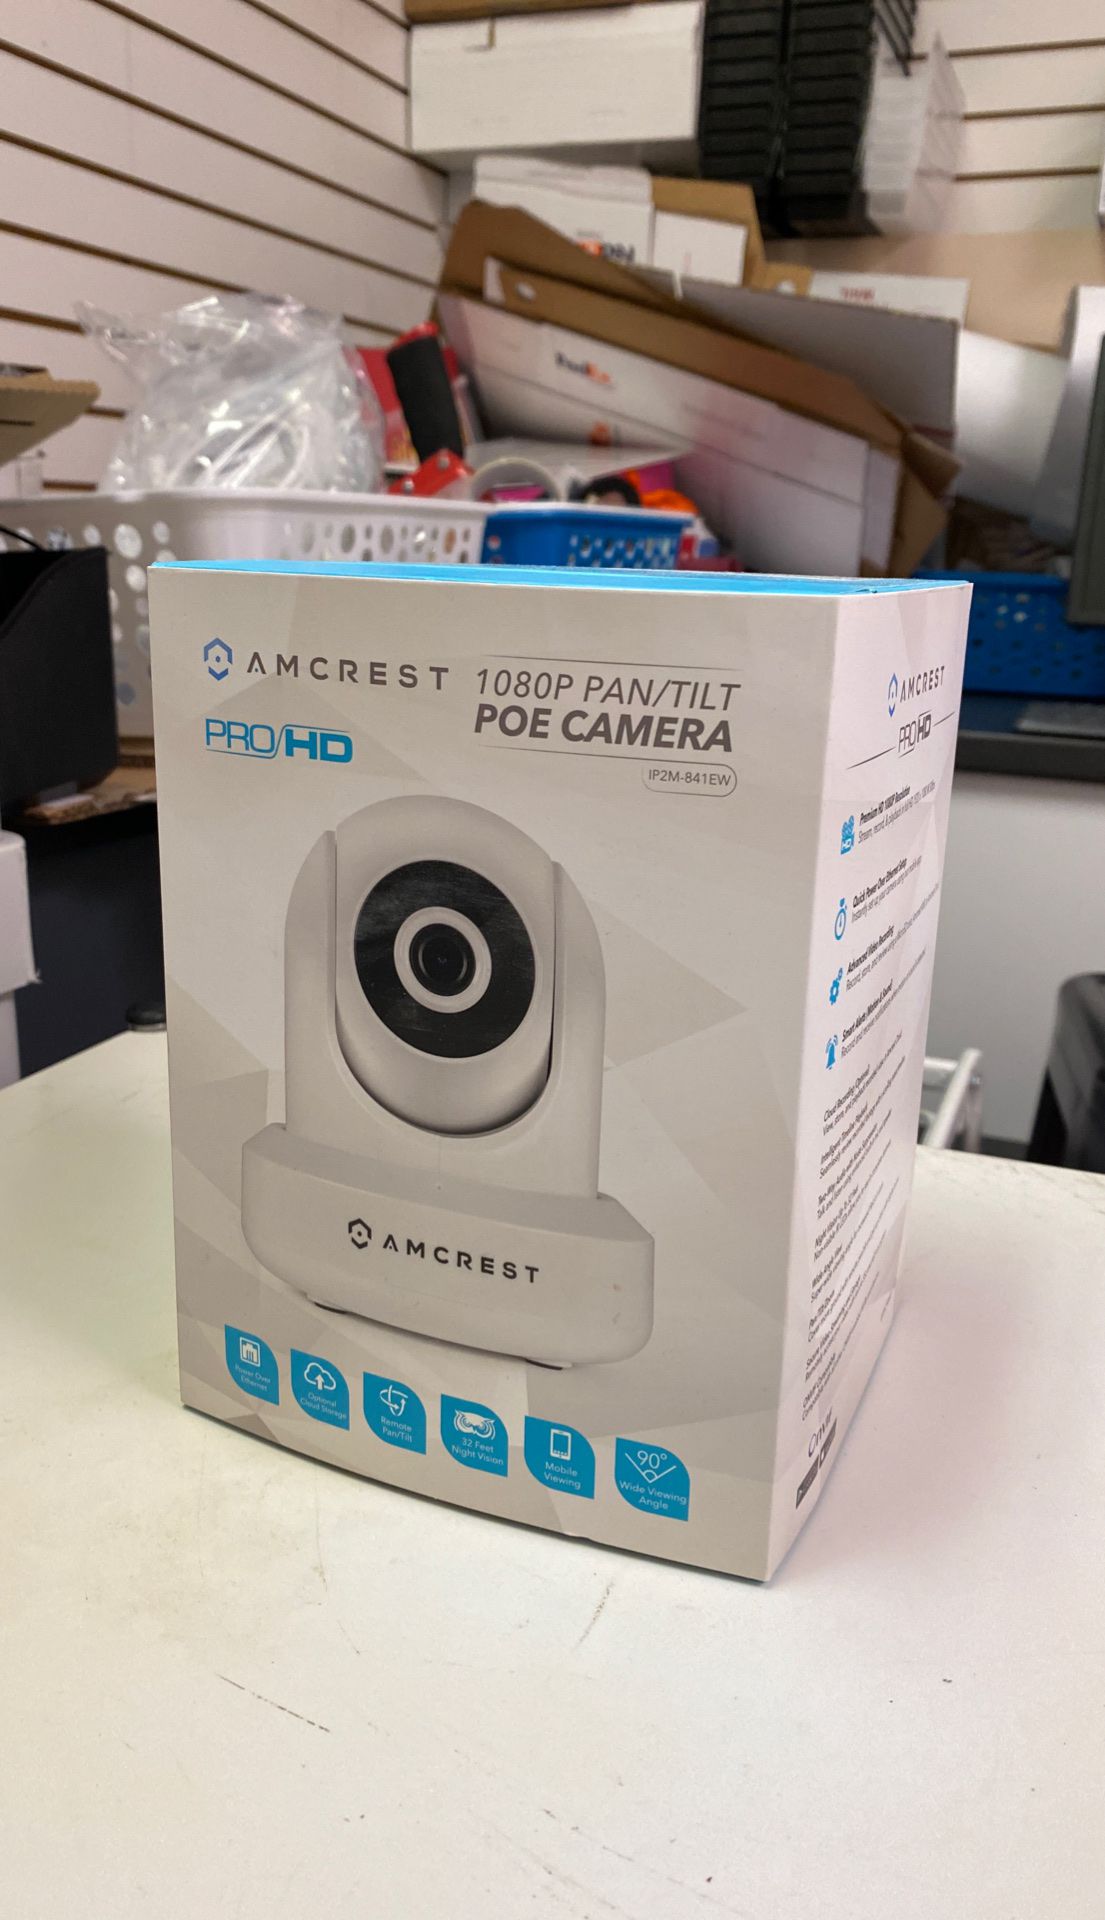 Amcrest Pro HD Poe Camera